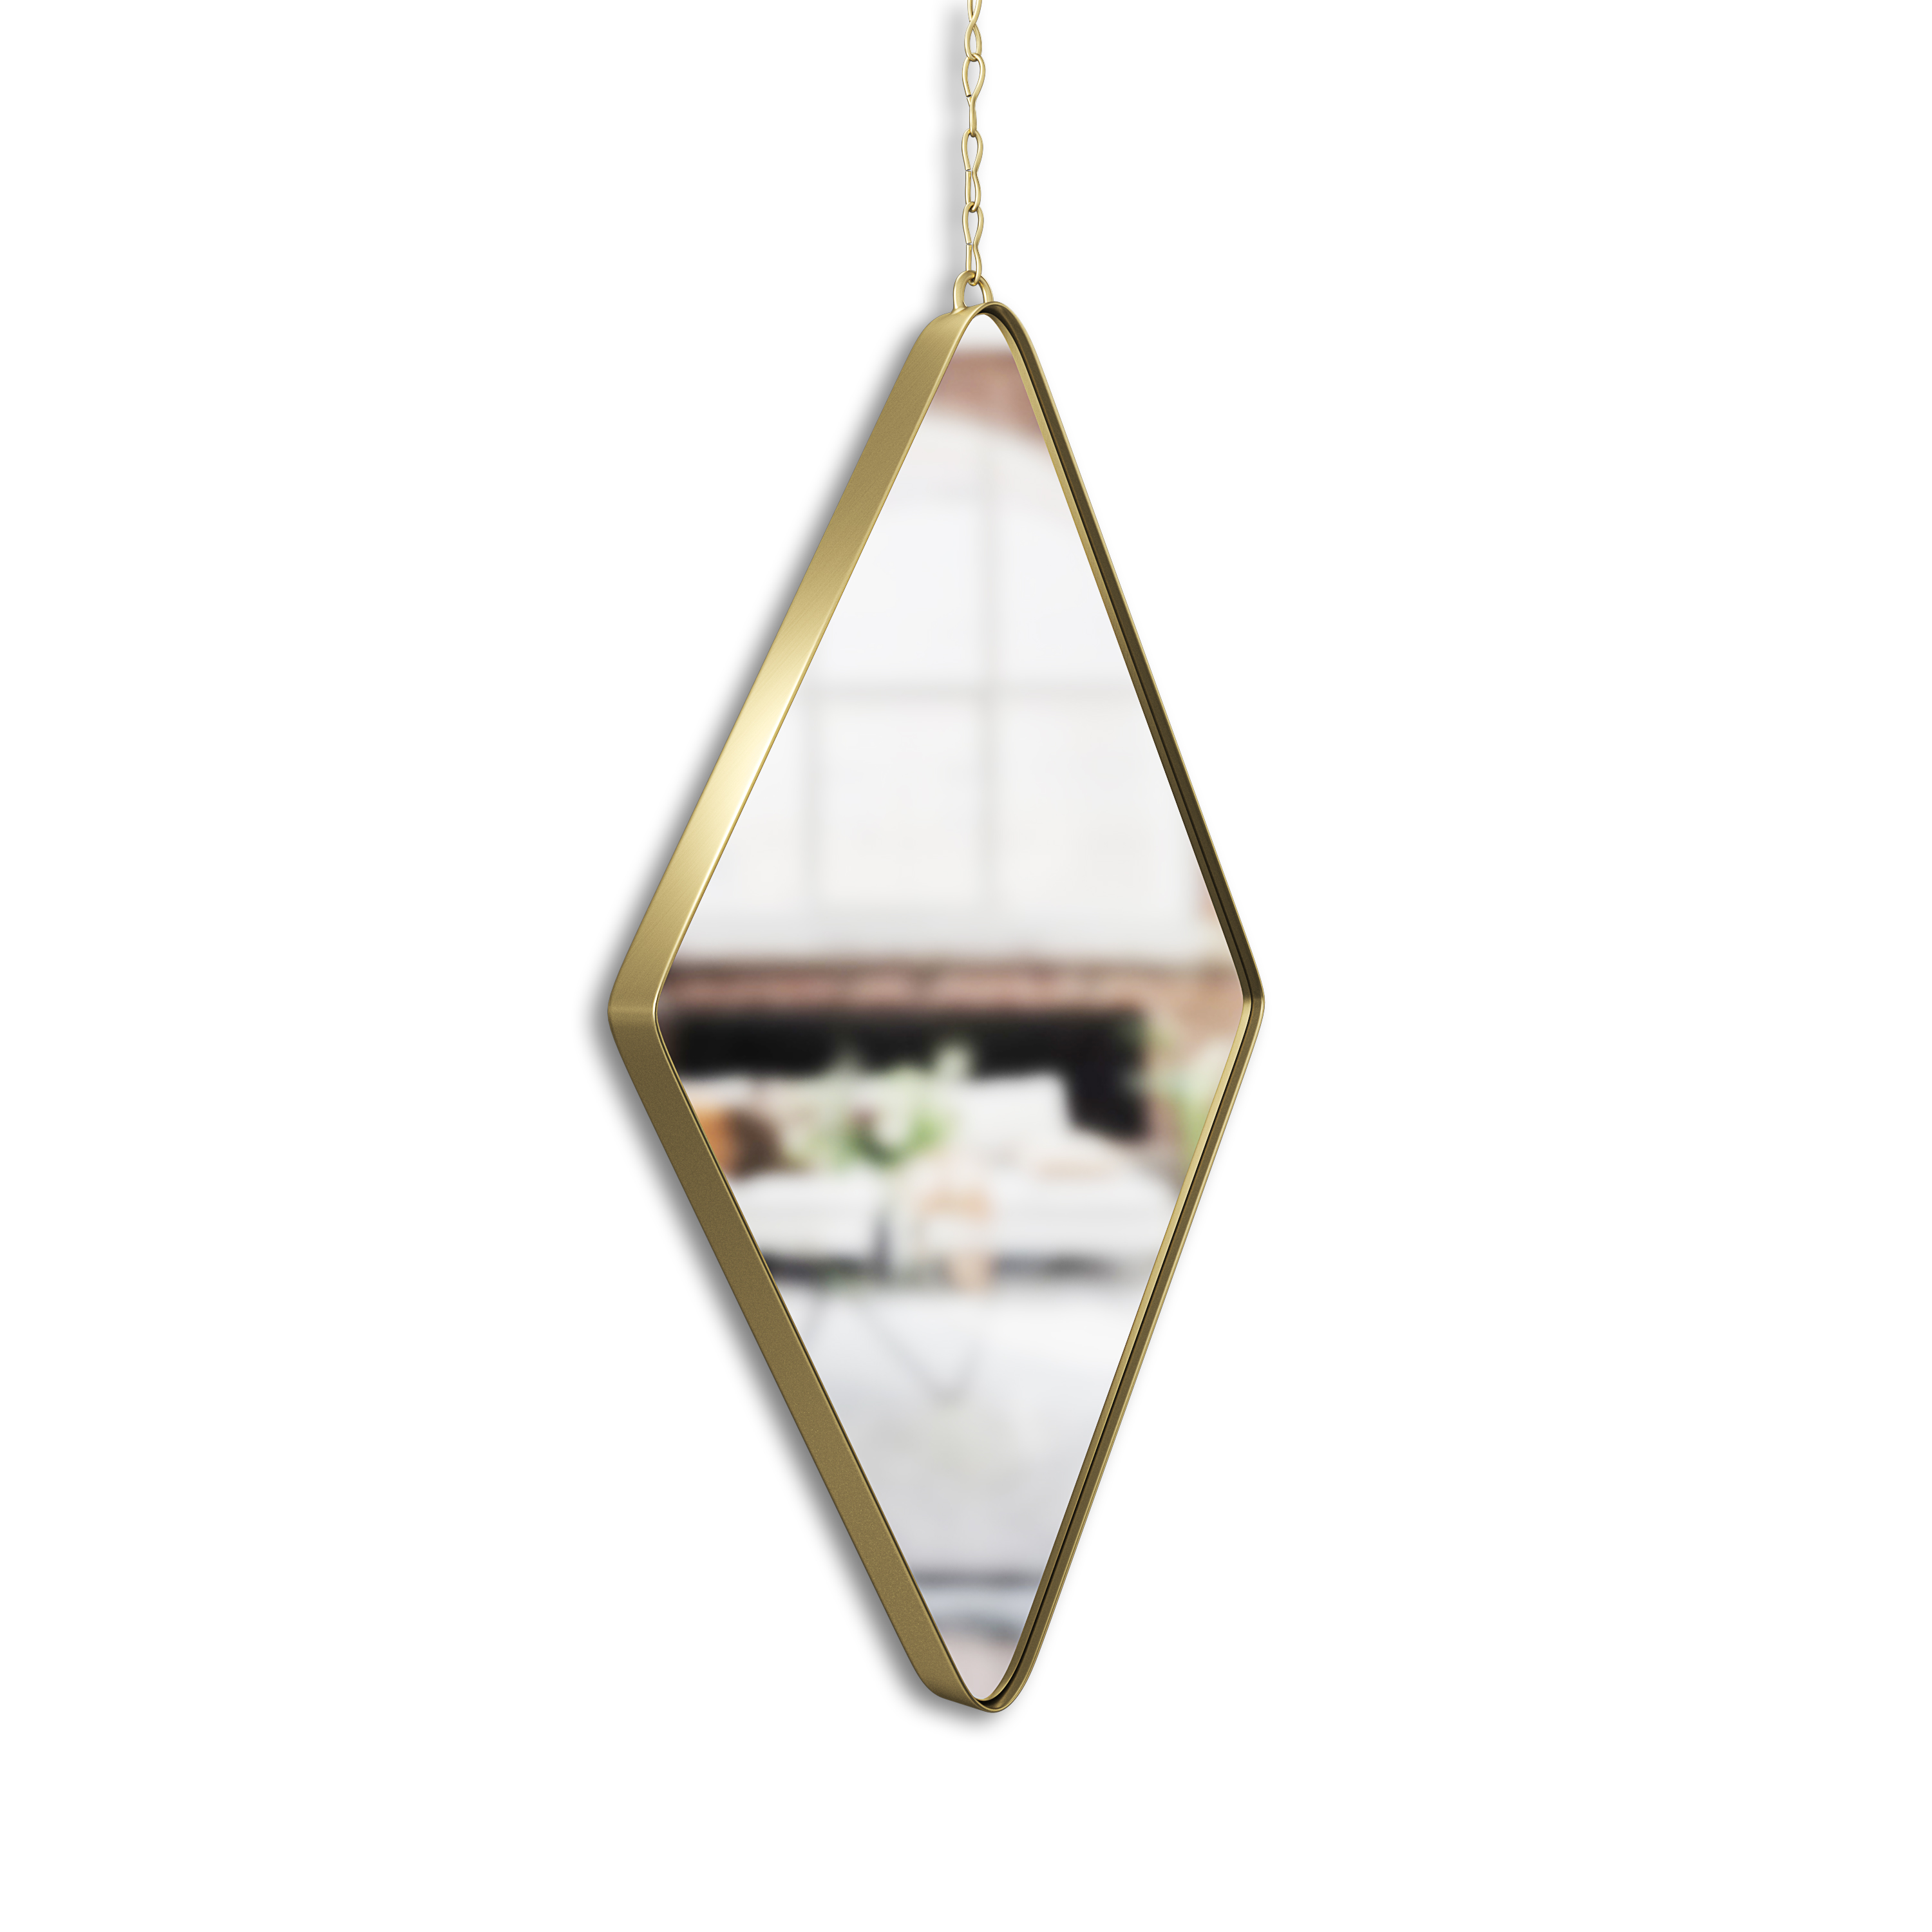 Umbra Dima Diamond Hanging Wall Mirrors 11.25 x 7" Set of 3 Brass - image 3 of 13